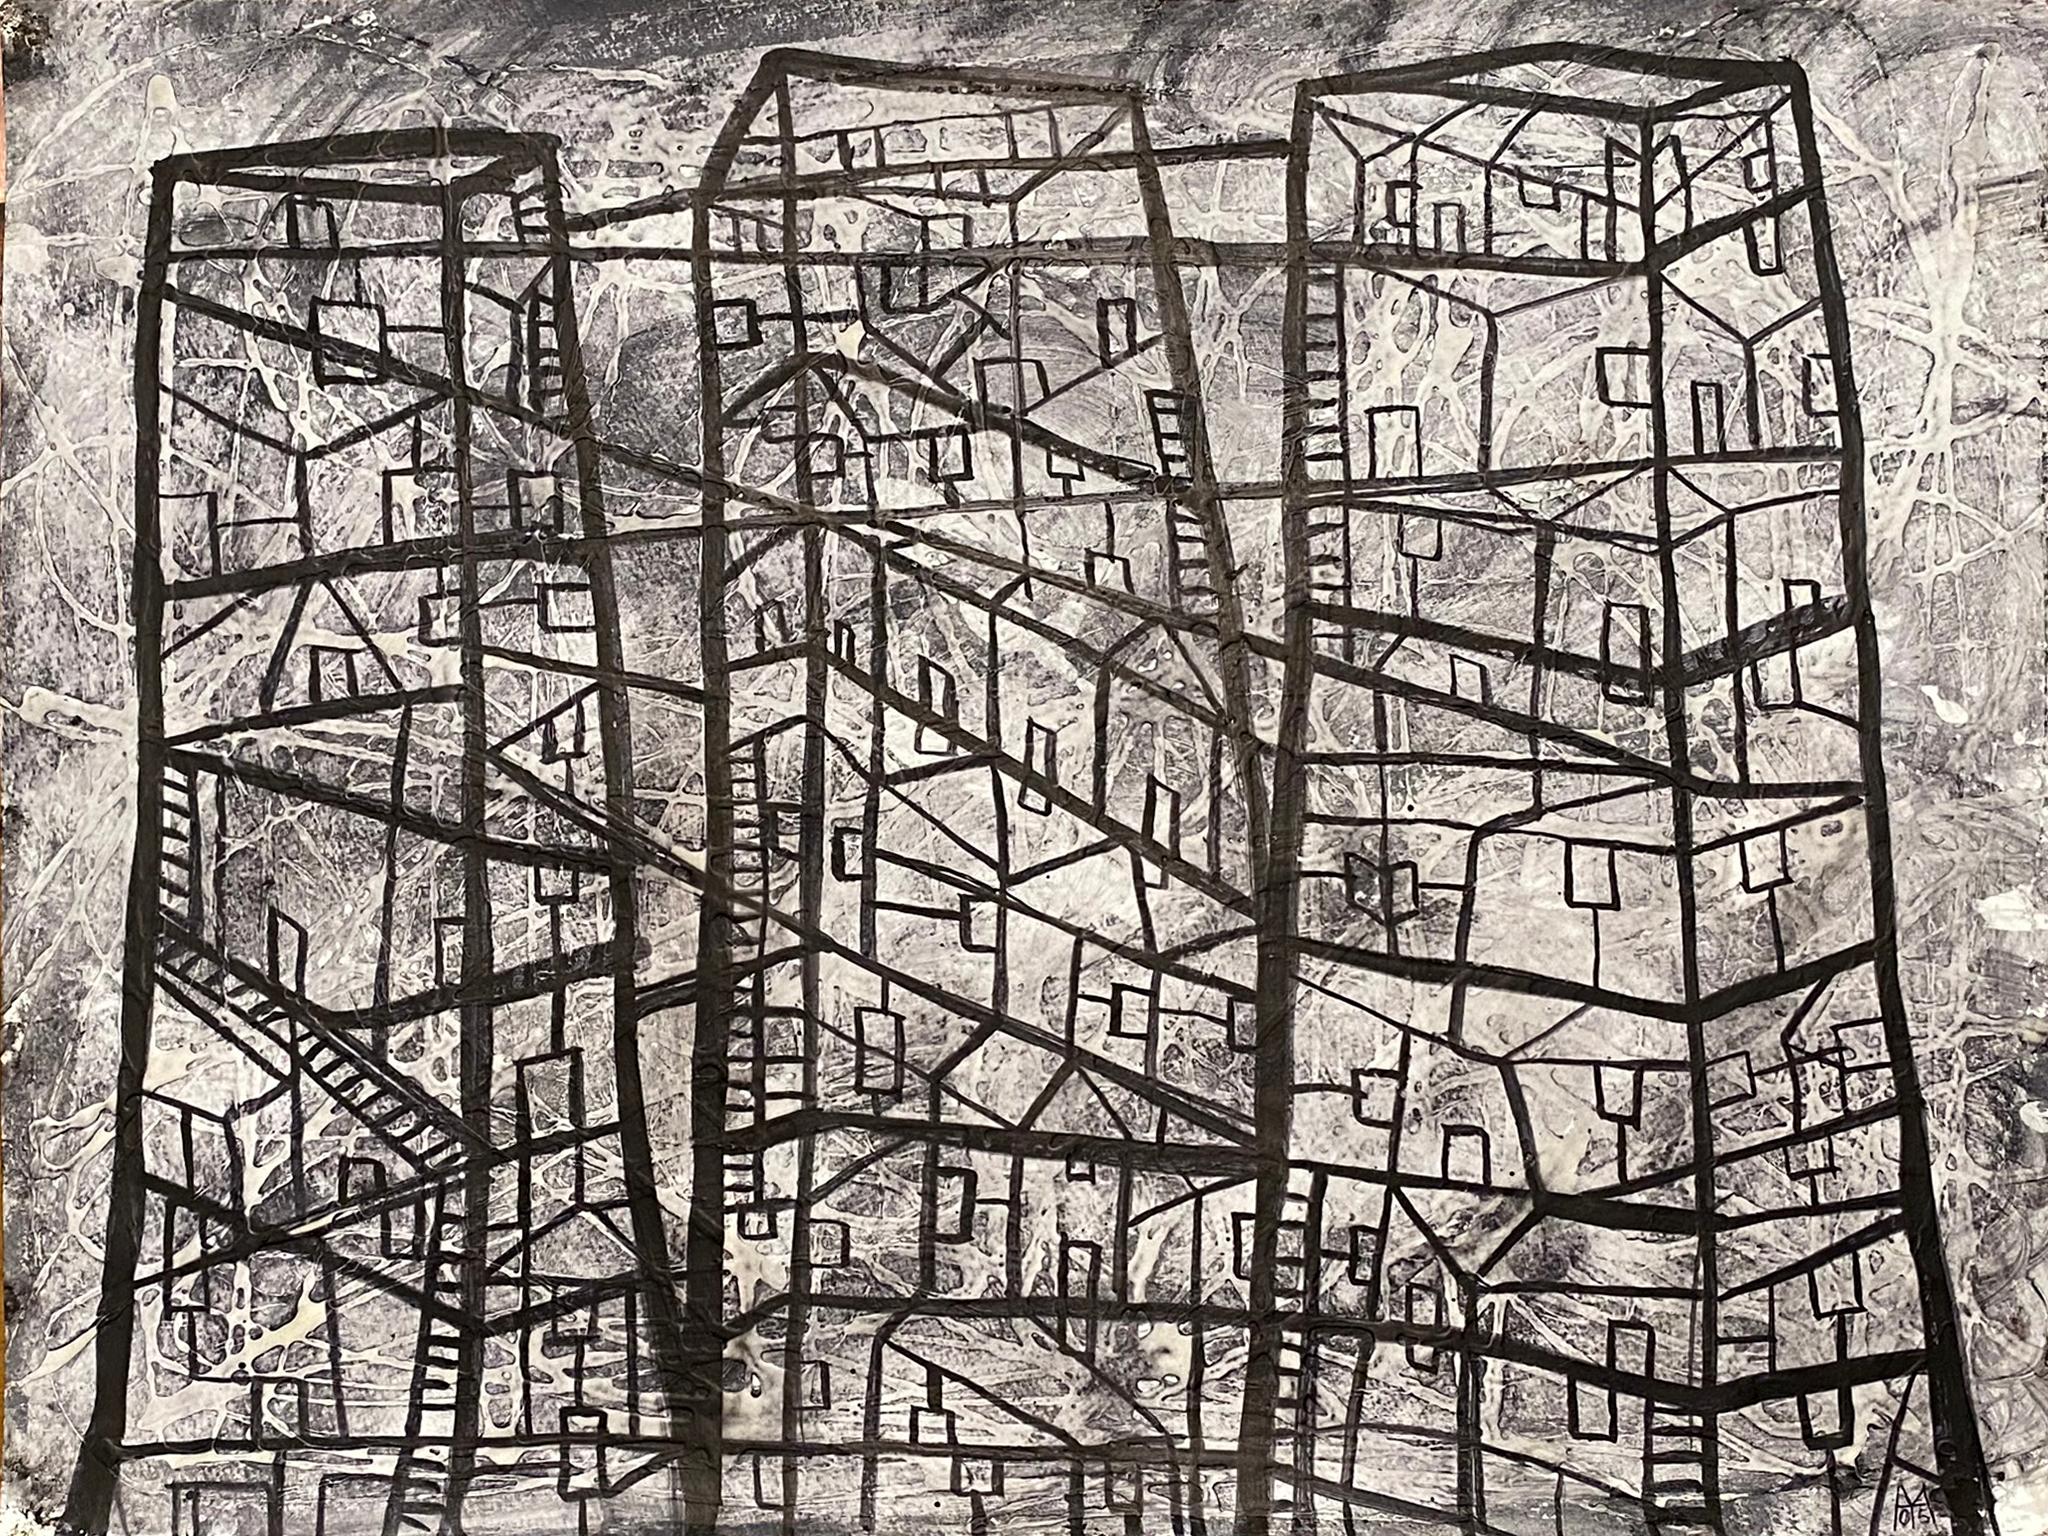 Mauricio Trenard Sayago Landscape Art - City Landscape #3, black and white monochromatic urban architectural abstraction